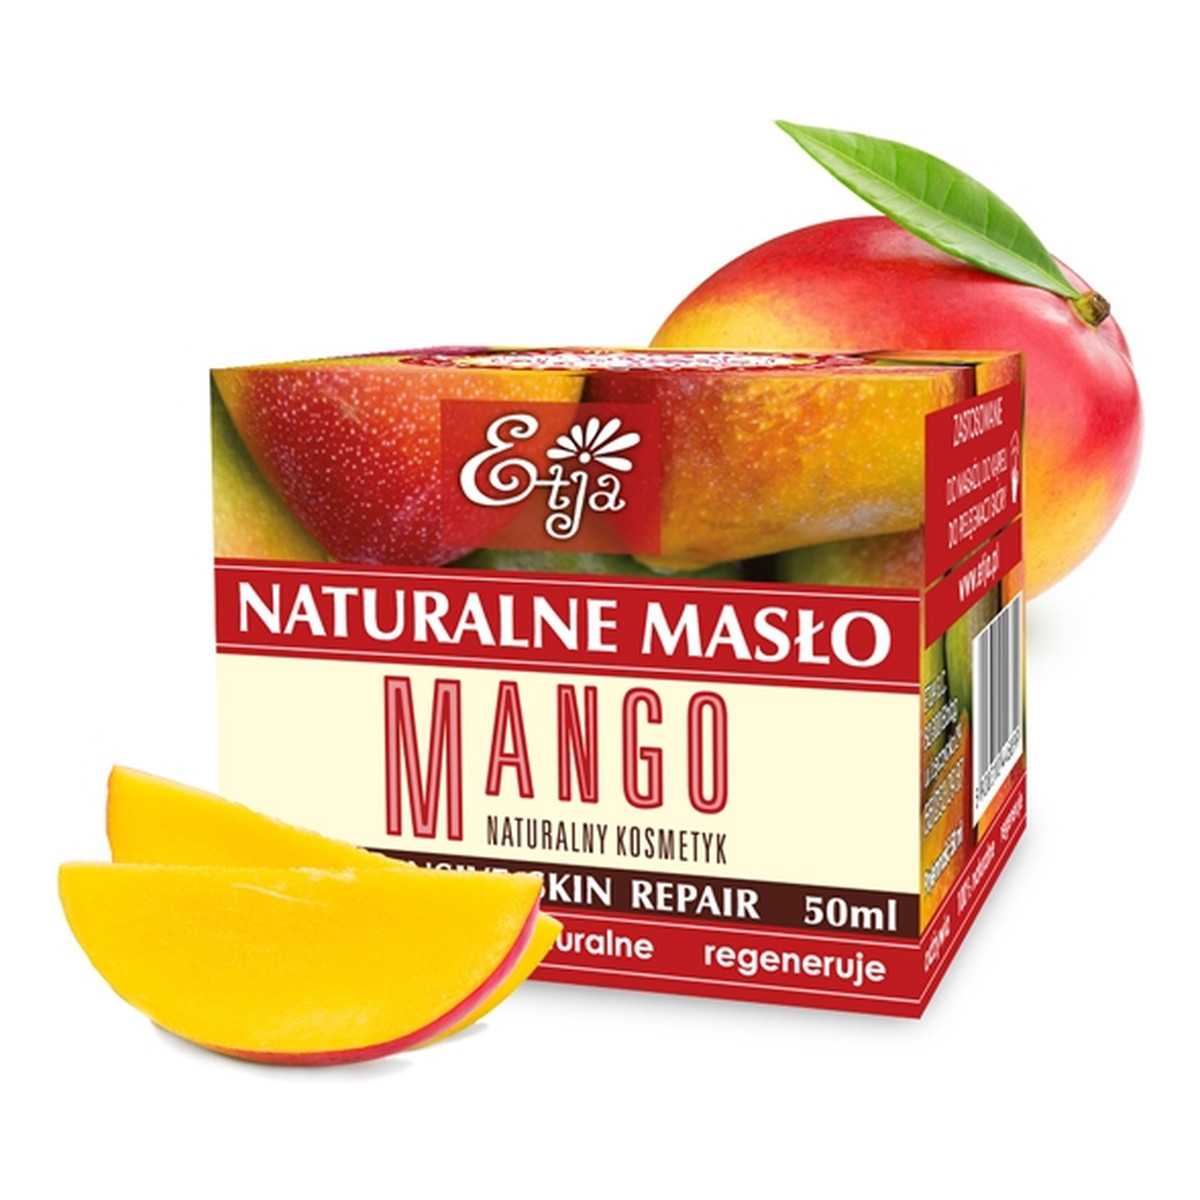 Etja naturalne rafinowane Masło mango 50ml